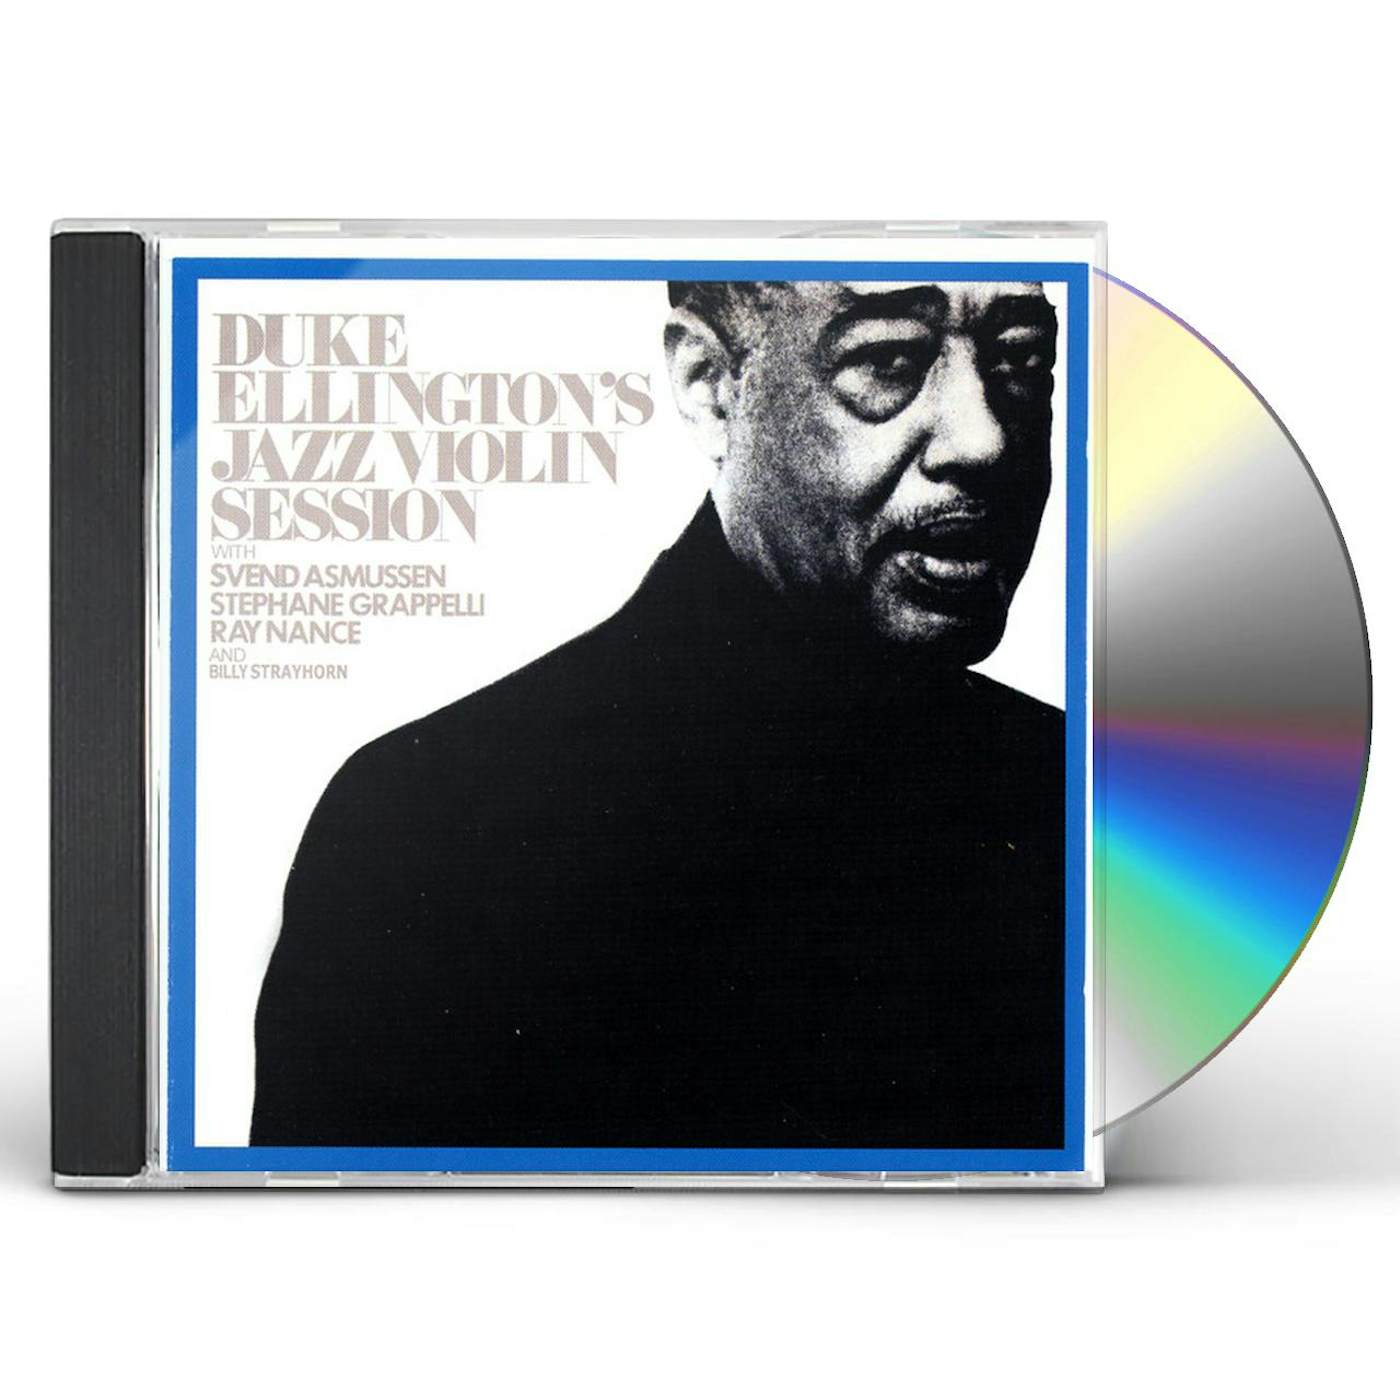 Duke Ellington JAZZ VIOLIN SESSION CD